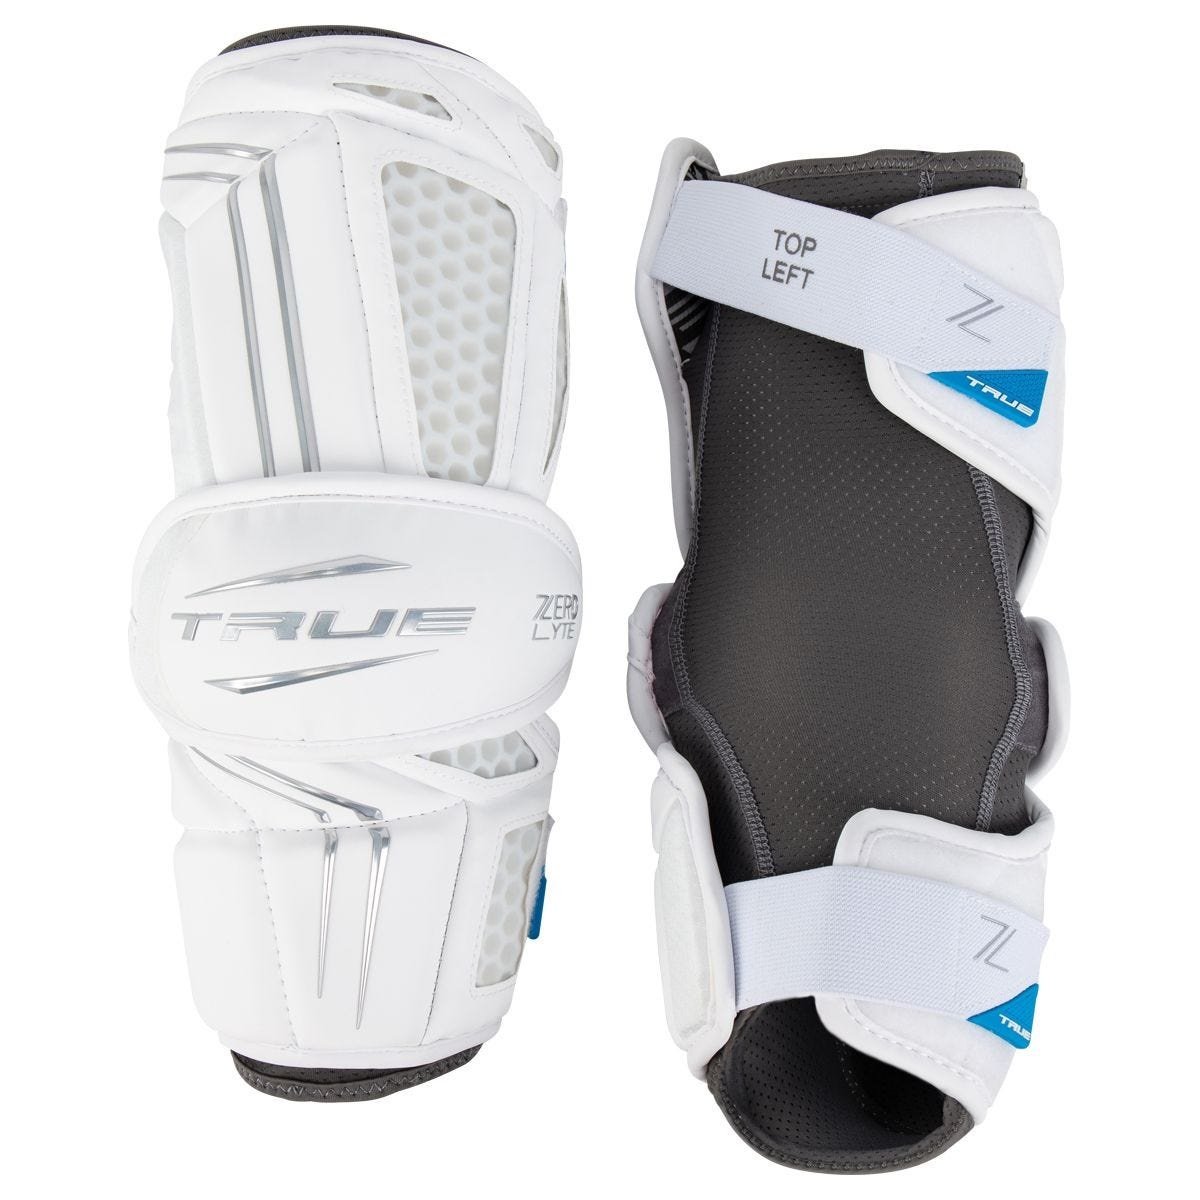 Zerolyte Lacrosse Shoulder Pad Liners